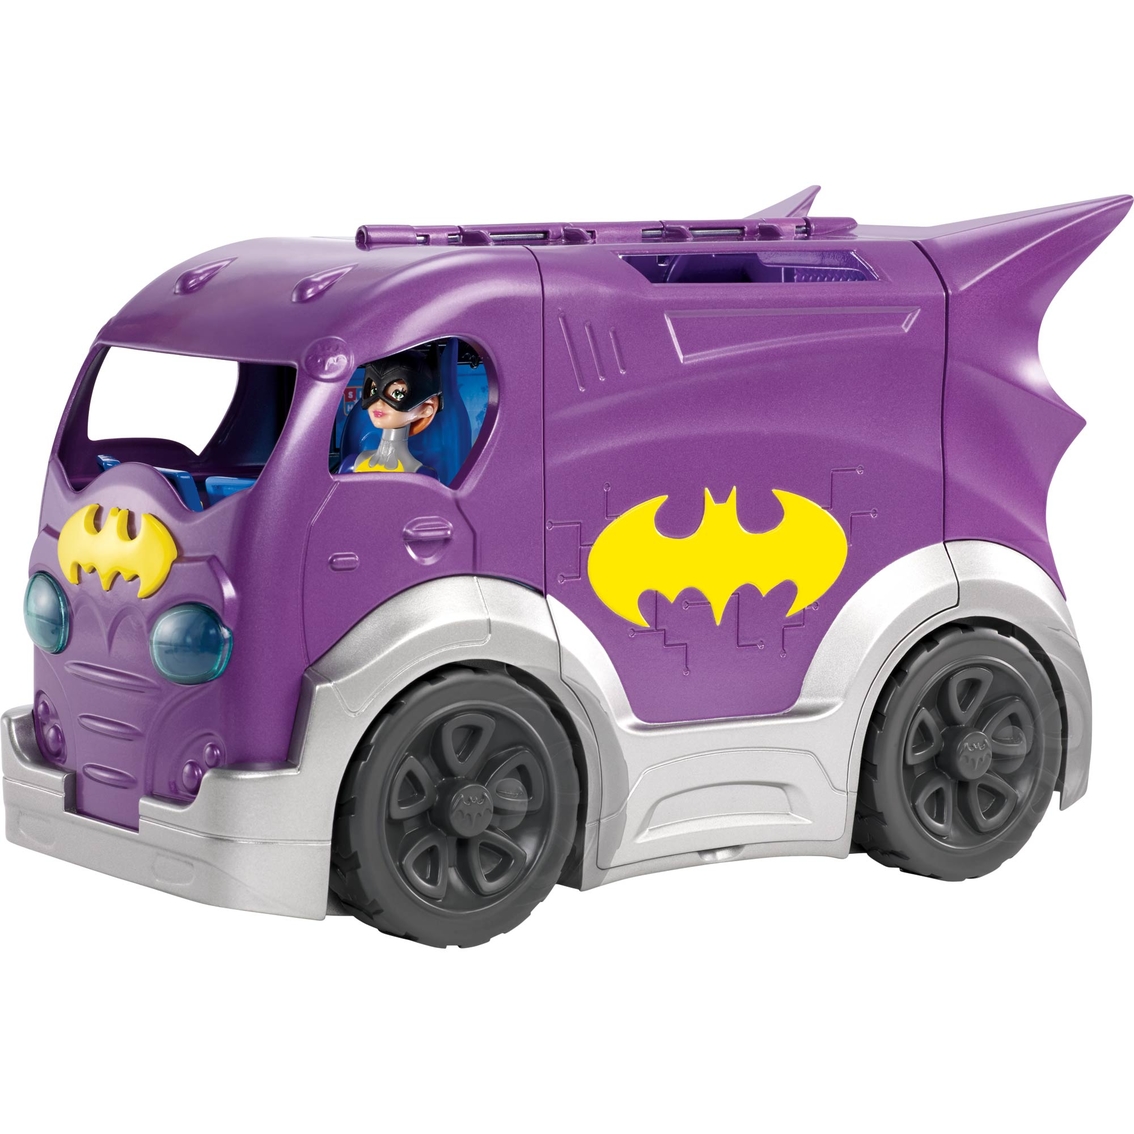 Mattel DC Superhero Batgirl Headquarters On Wheels - Image 2 of 2